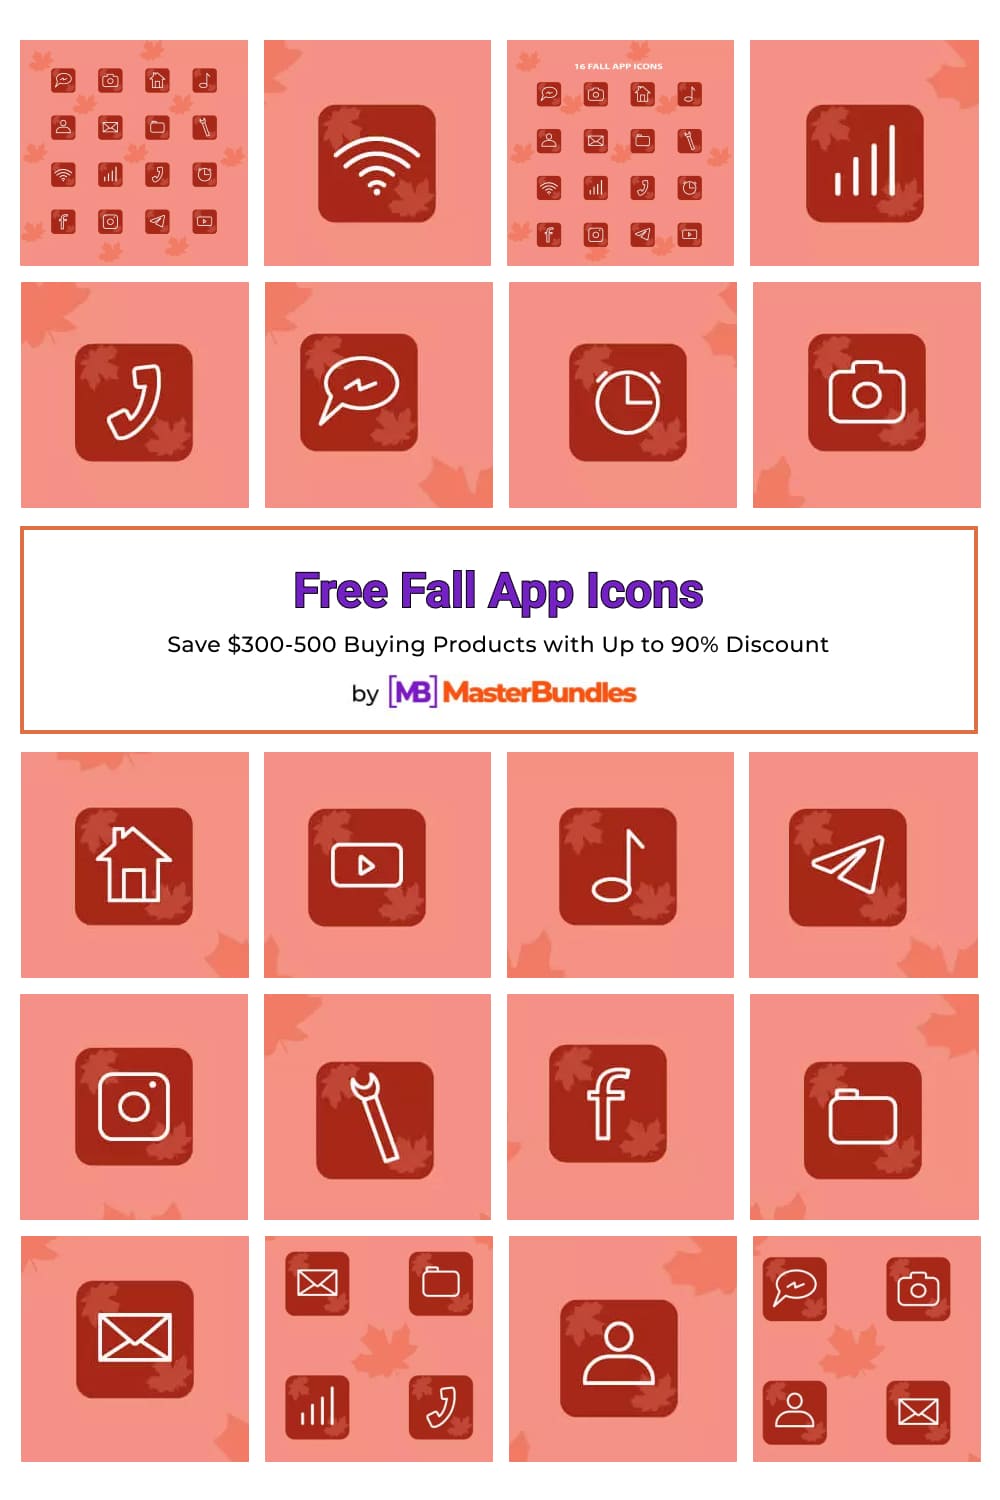 Free Fall App Icons Pinterest image.